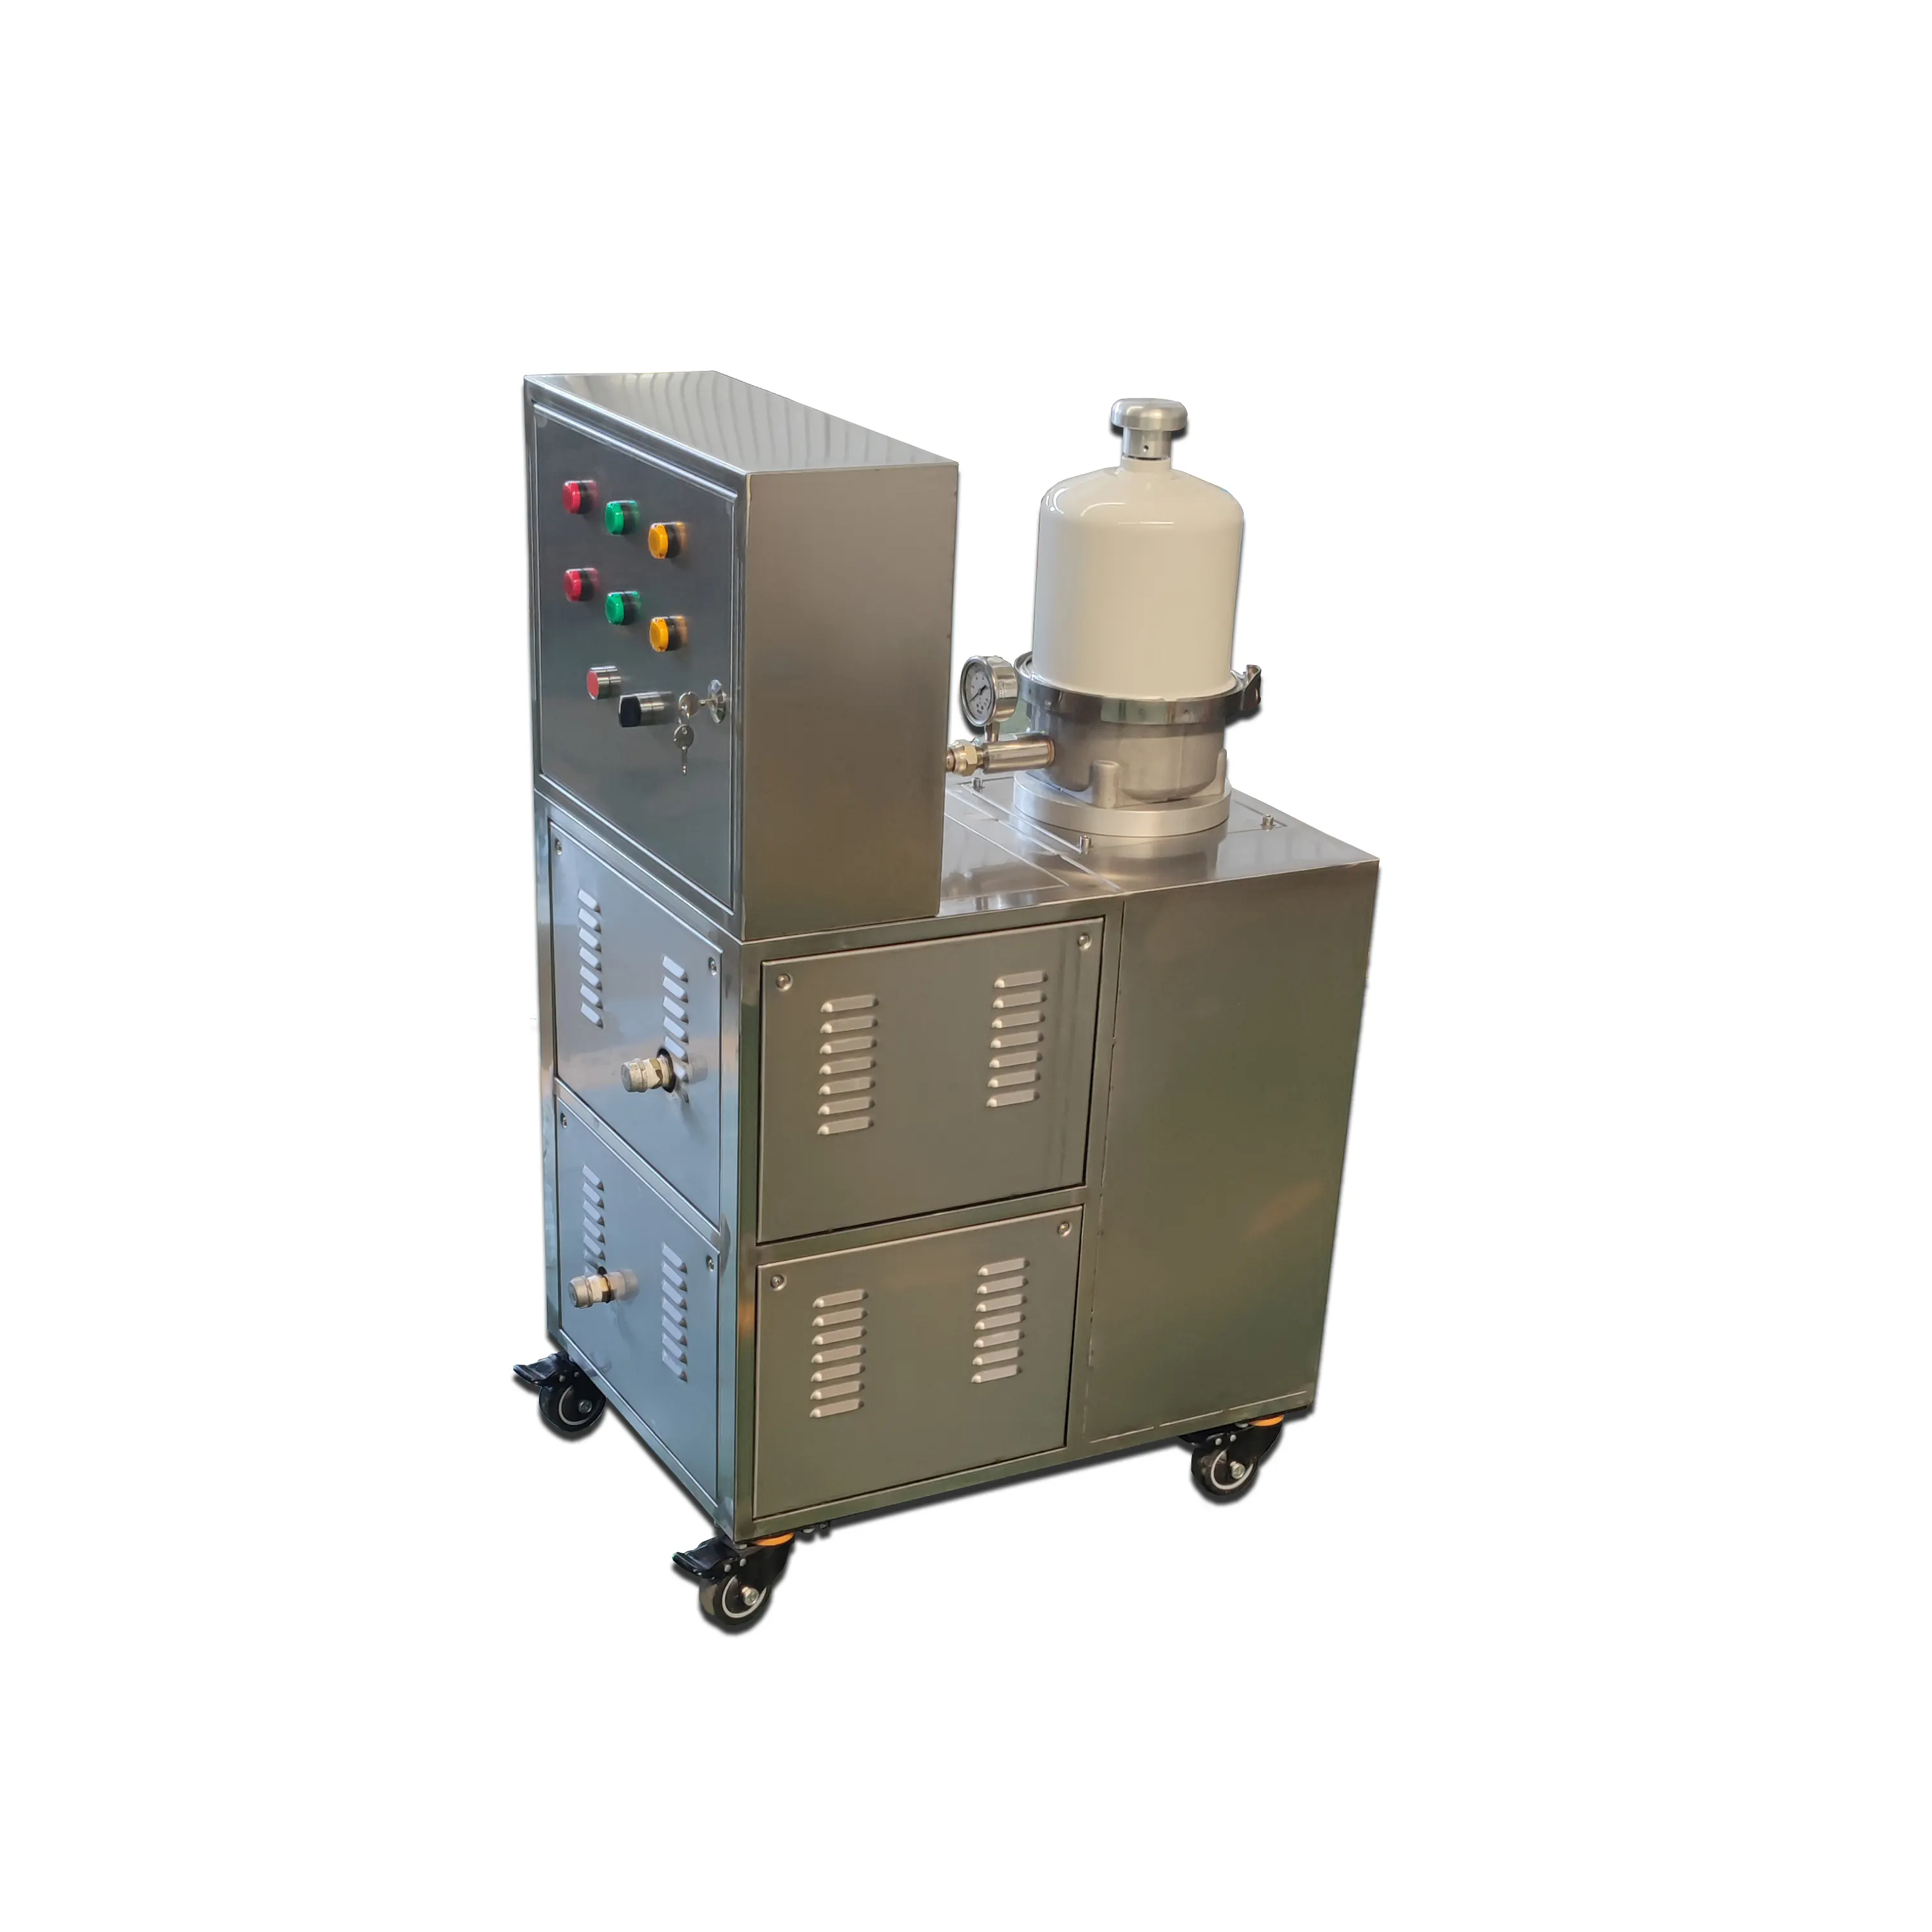 Oil purification machine for transformer oil